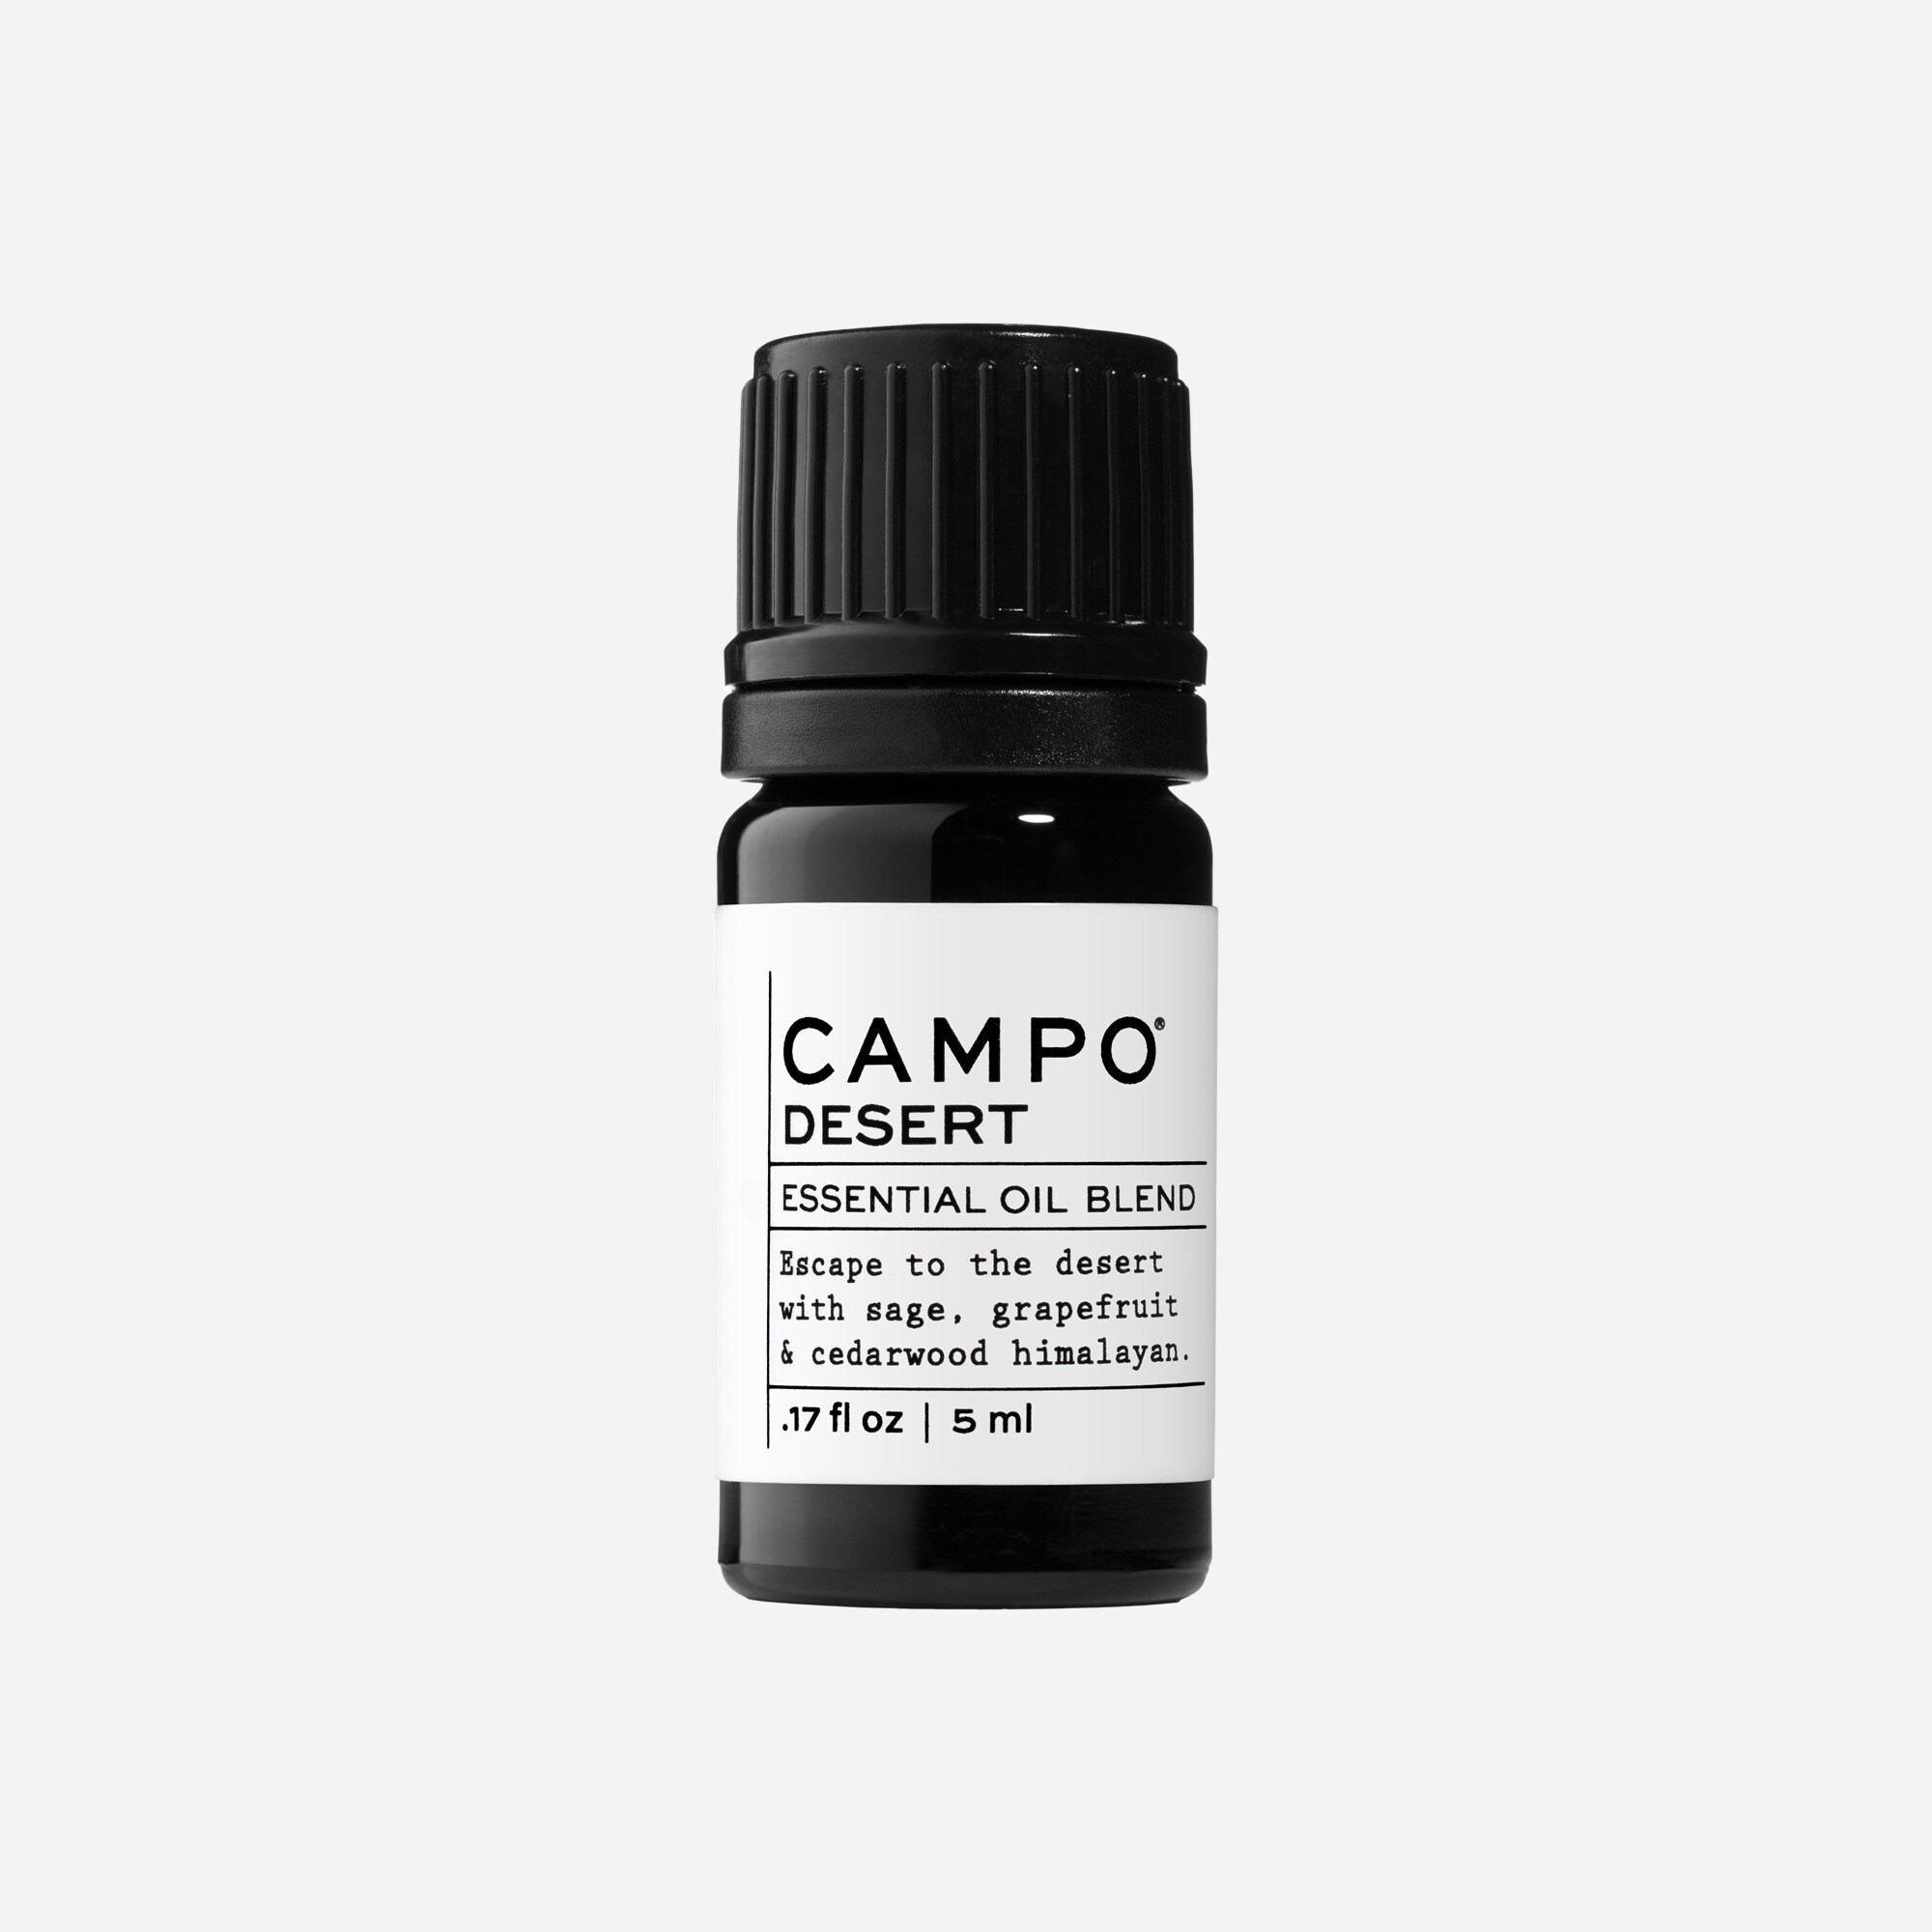  CAMPO® DESERT blend essential oil